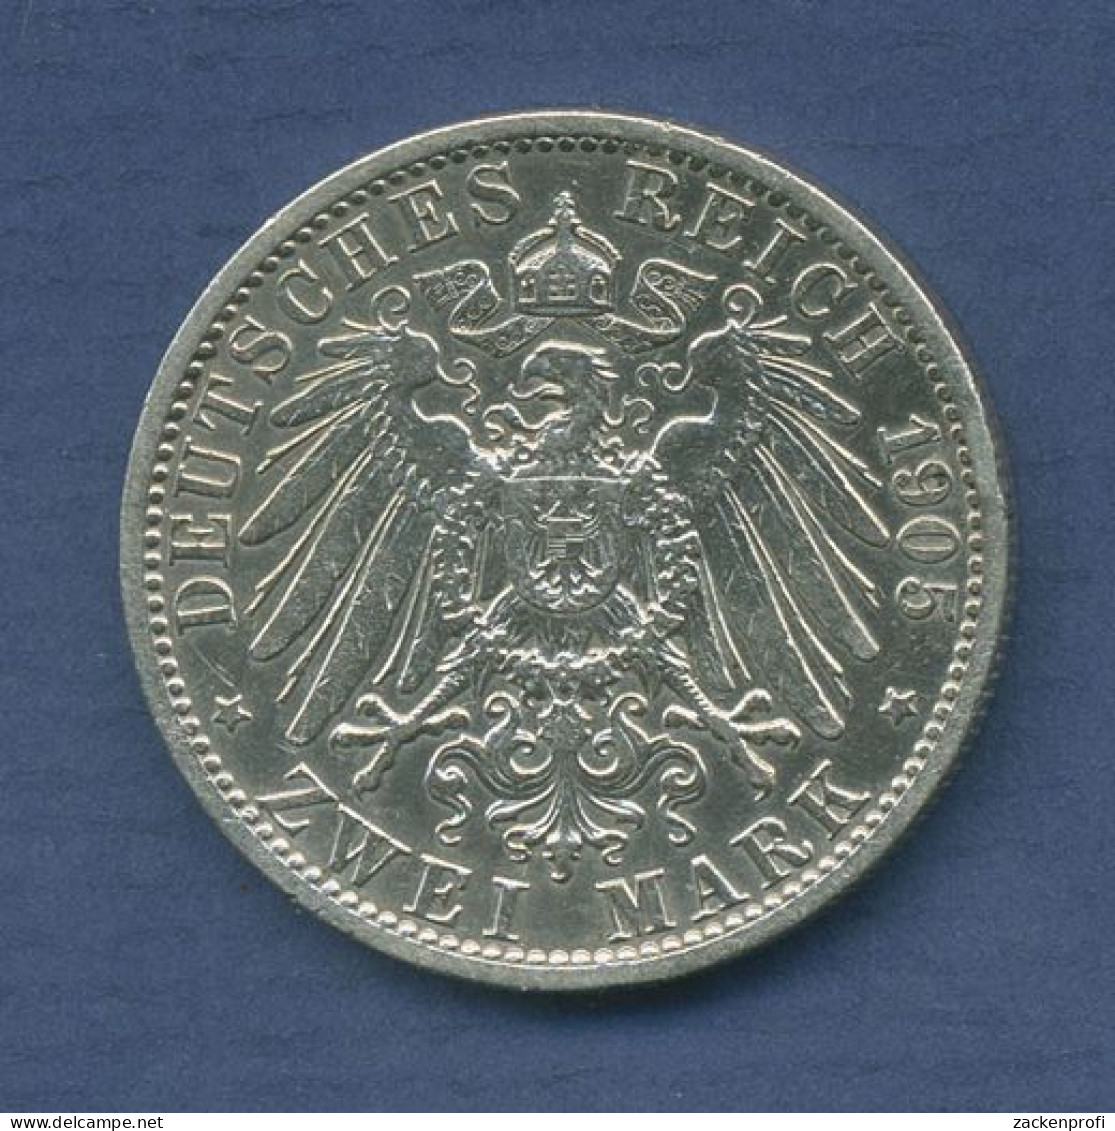 Preußen 2 Mark 1905 A, Kaiser Wilhelm II., J 102 Ss-vz (m3733) - 2, 3 & 5 Mark Argent